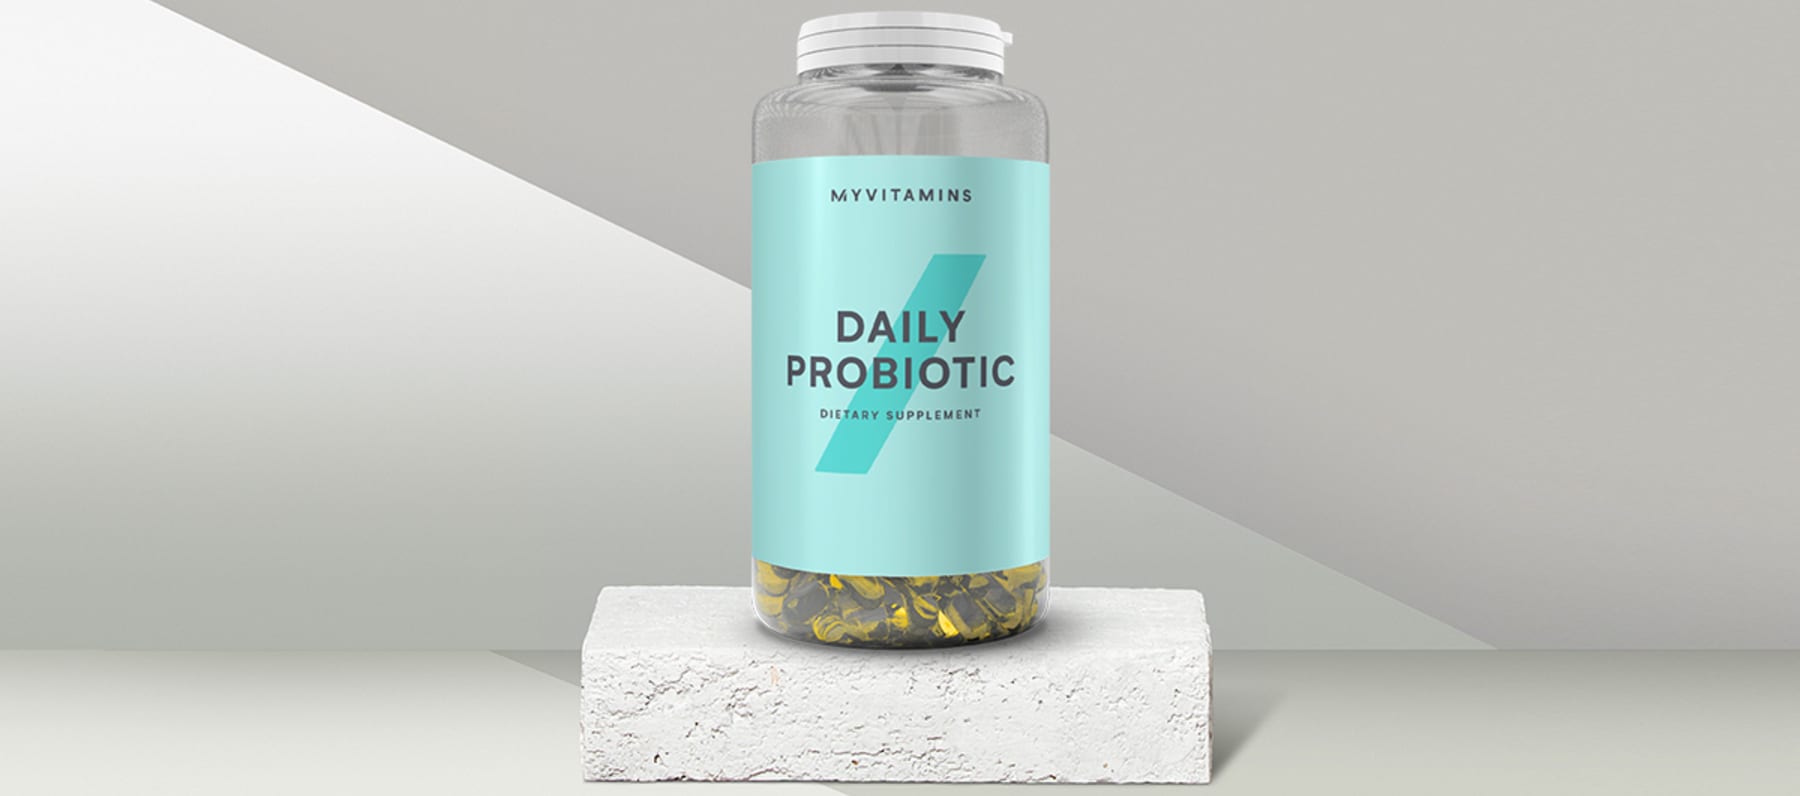 What Are Probiotics? Probiotic Supplements, Benefits & Dosage